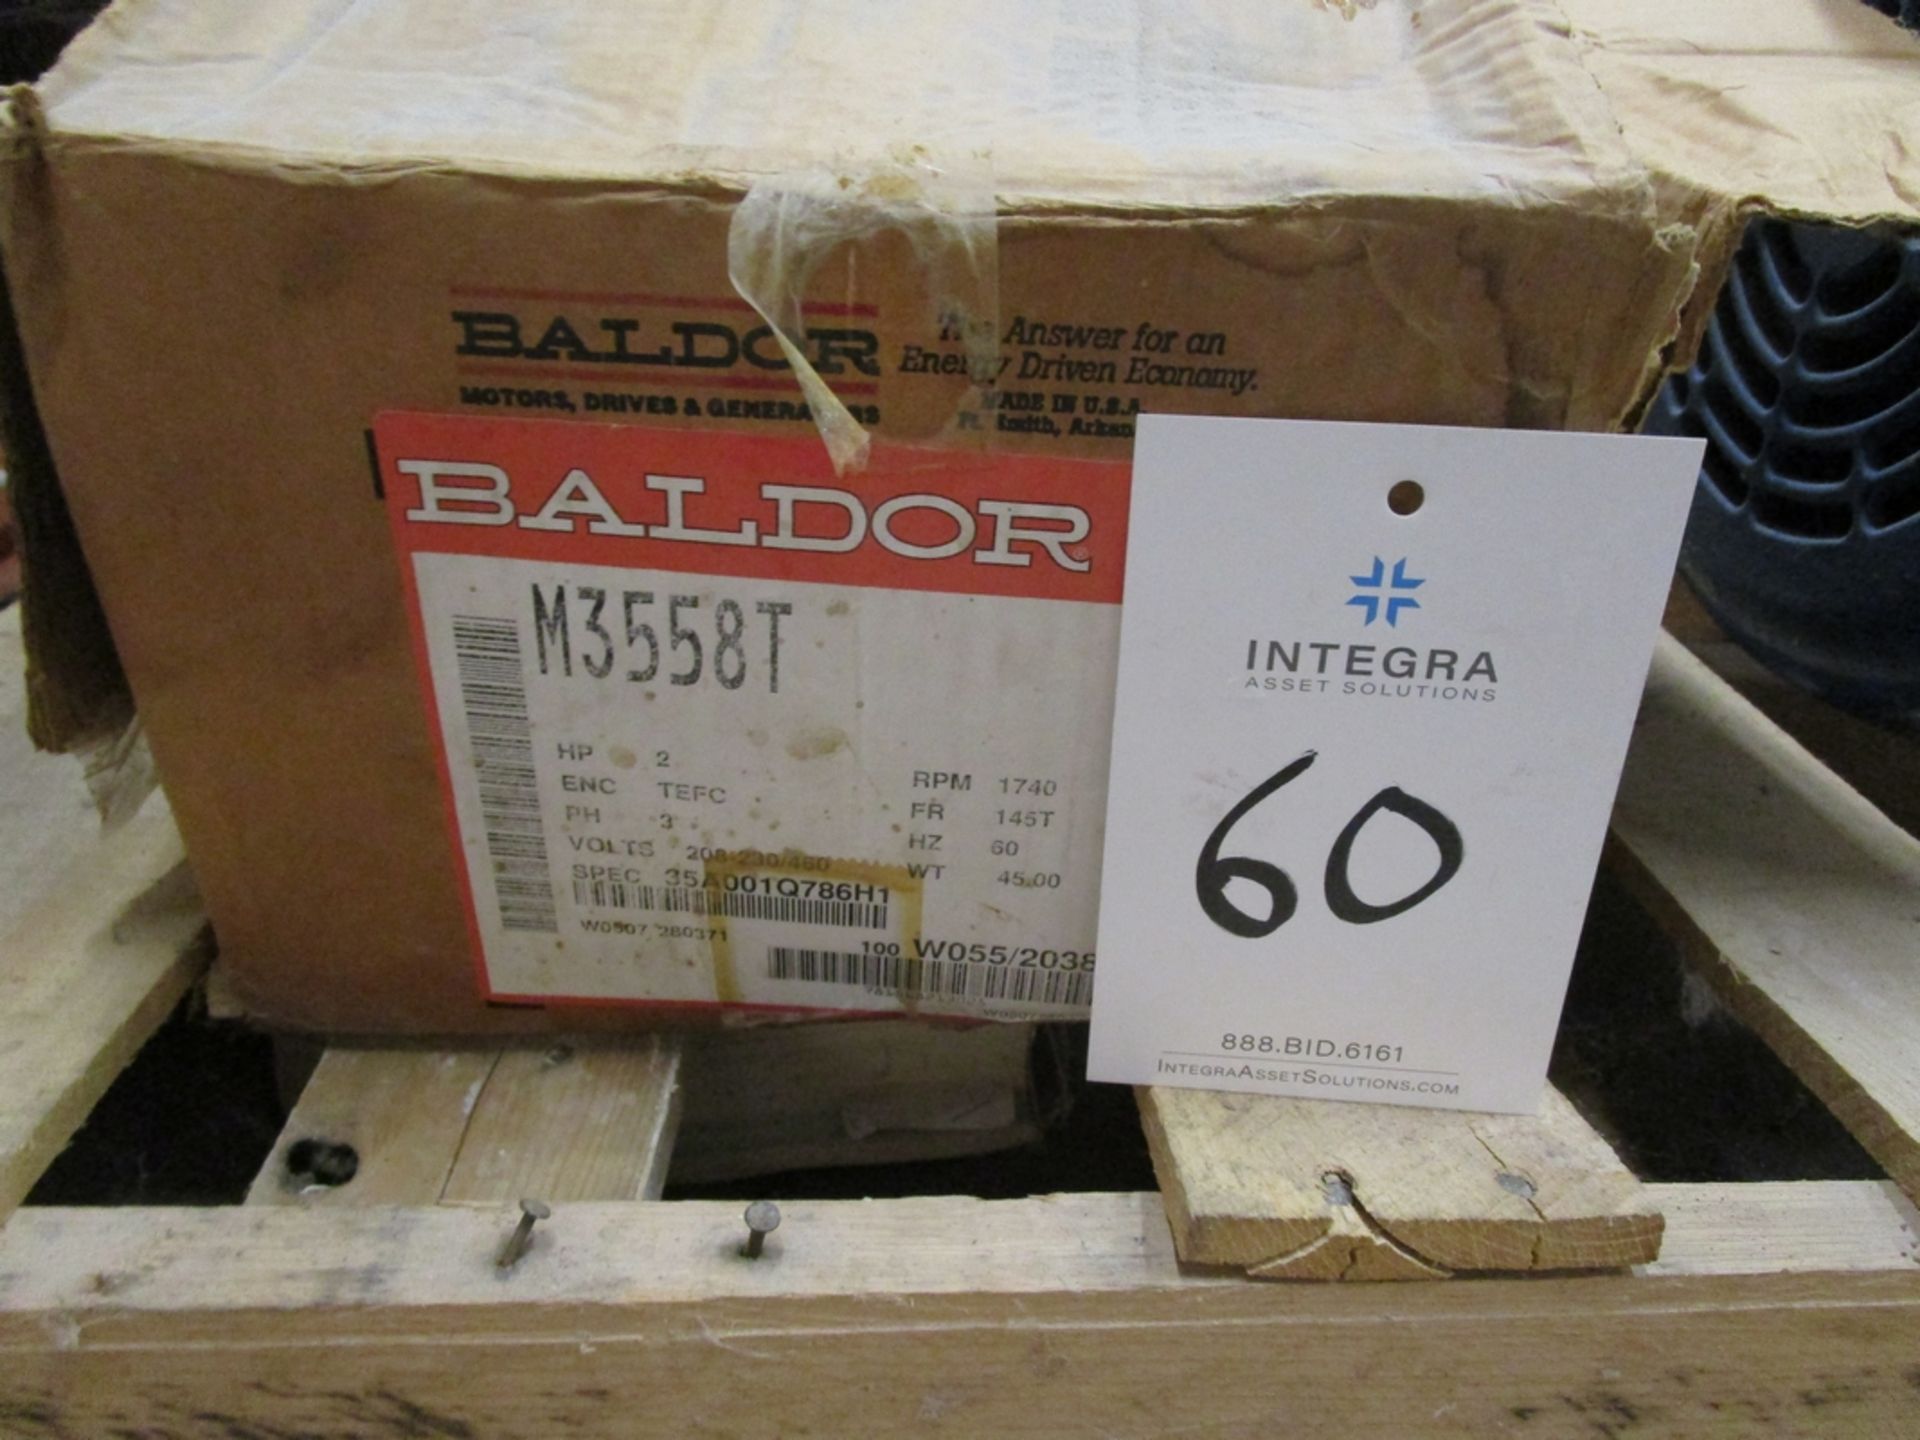 Baldor 2-HP Induction Motor